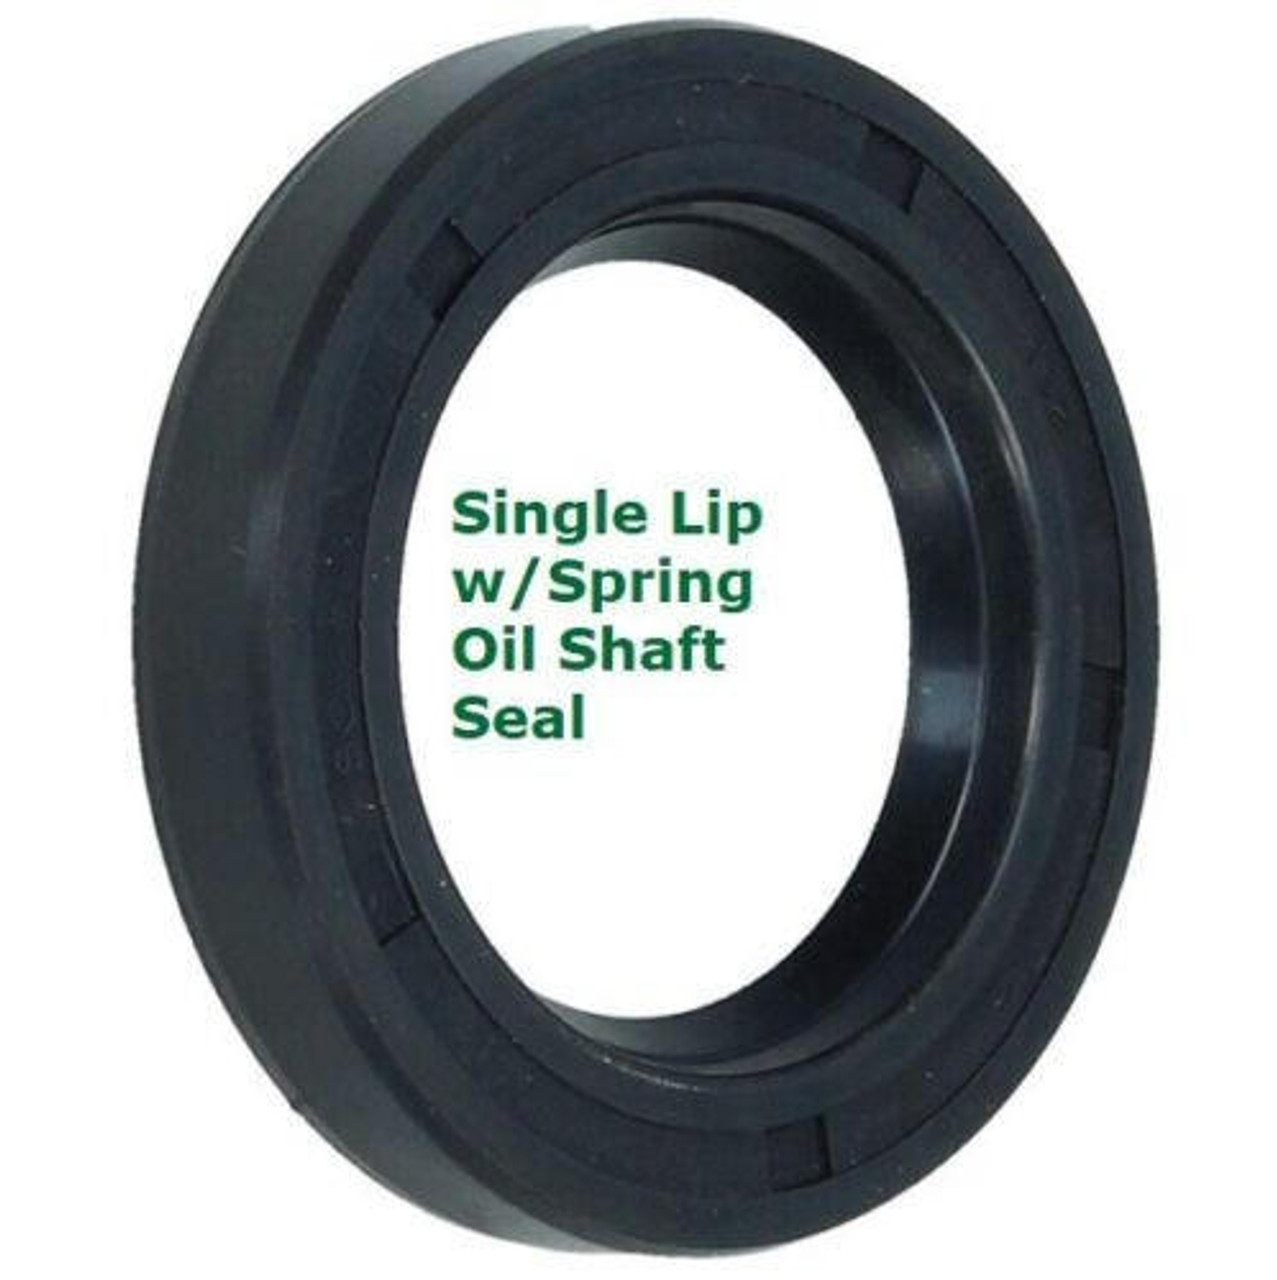 Metric Oil Shaft Seal 440 x 480 x 20mm   Single Lip   Price for 1 pc